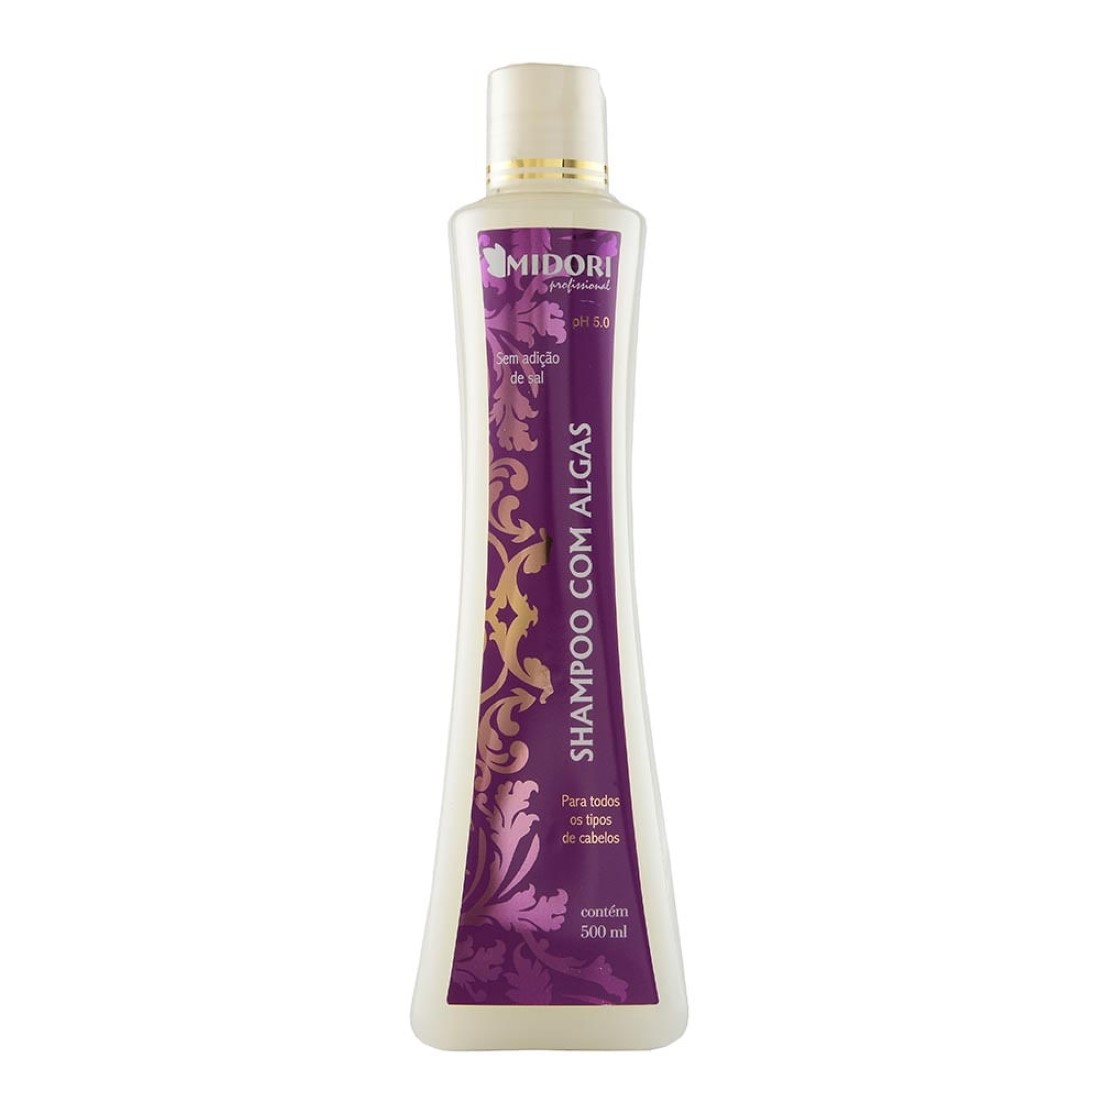 Shampoo com Algas 500 ml - Midori Profissional